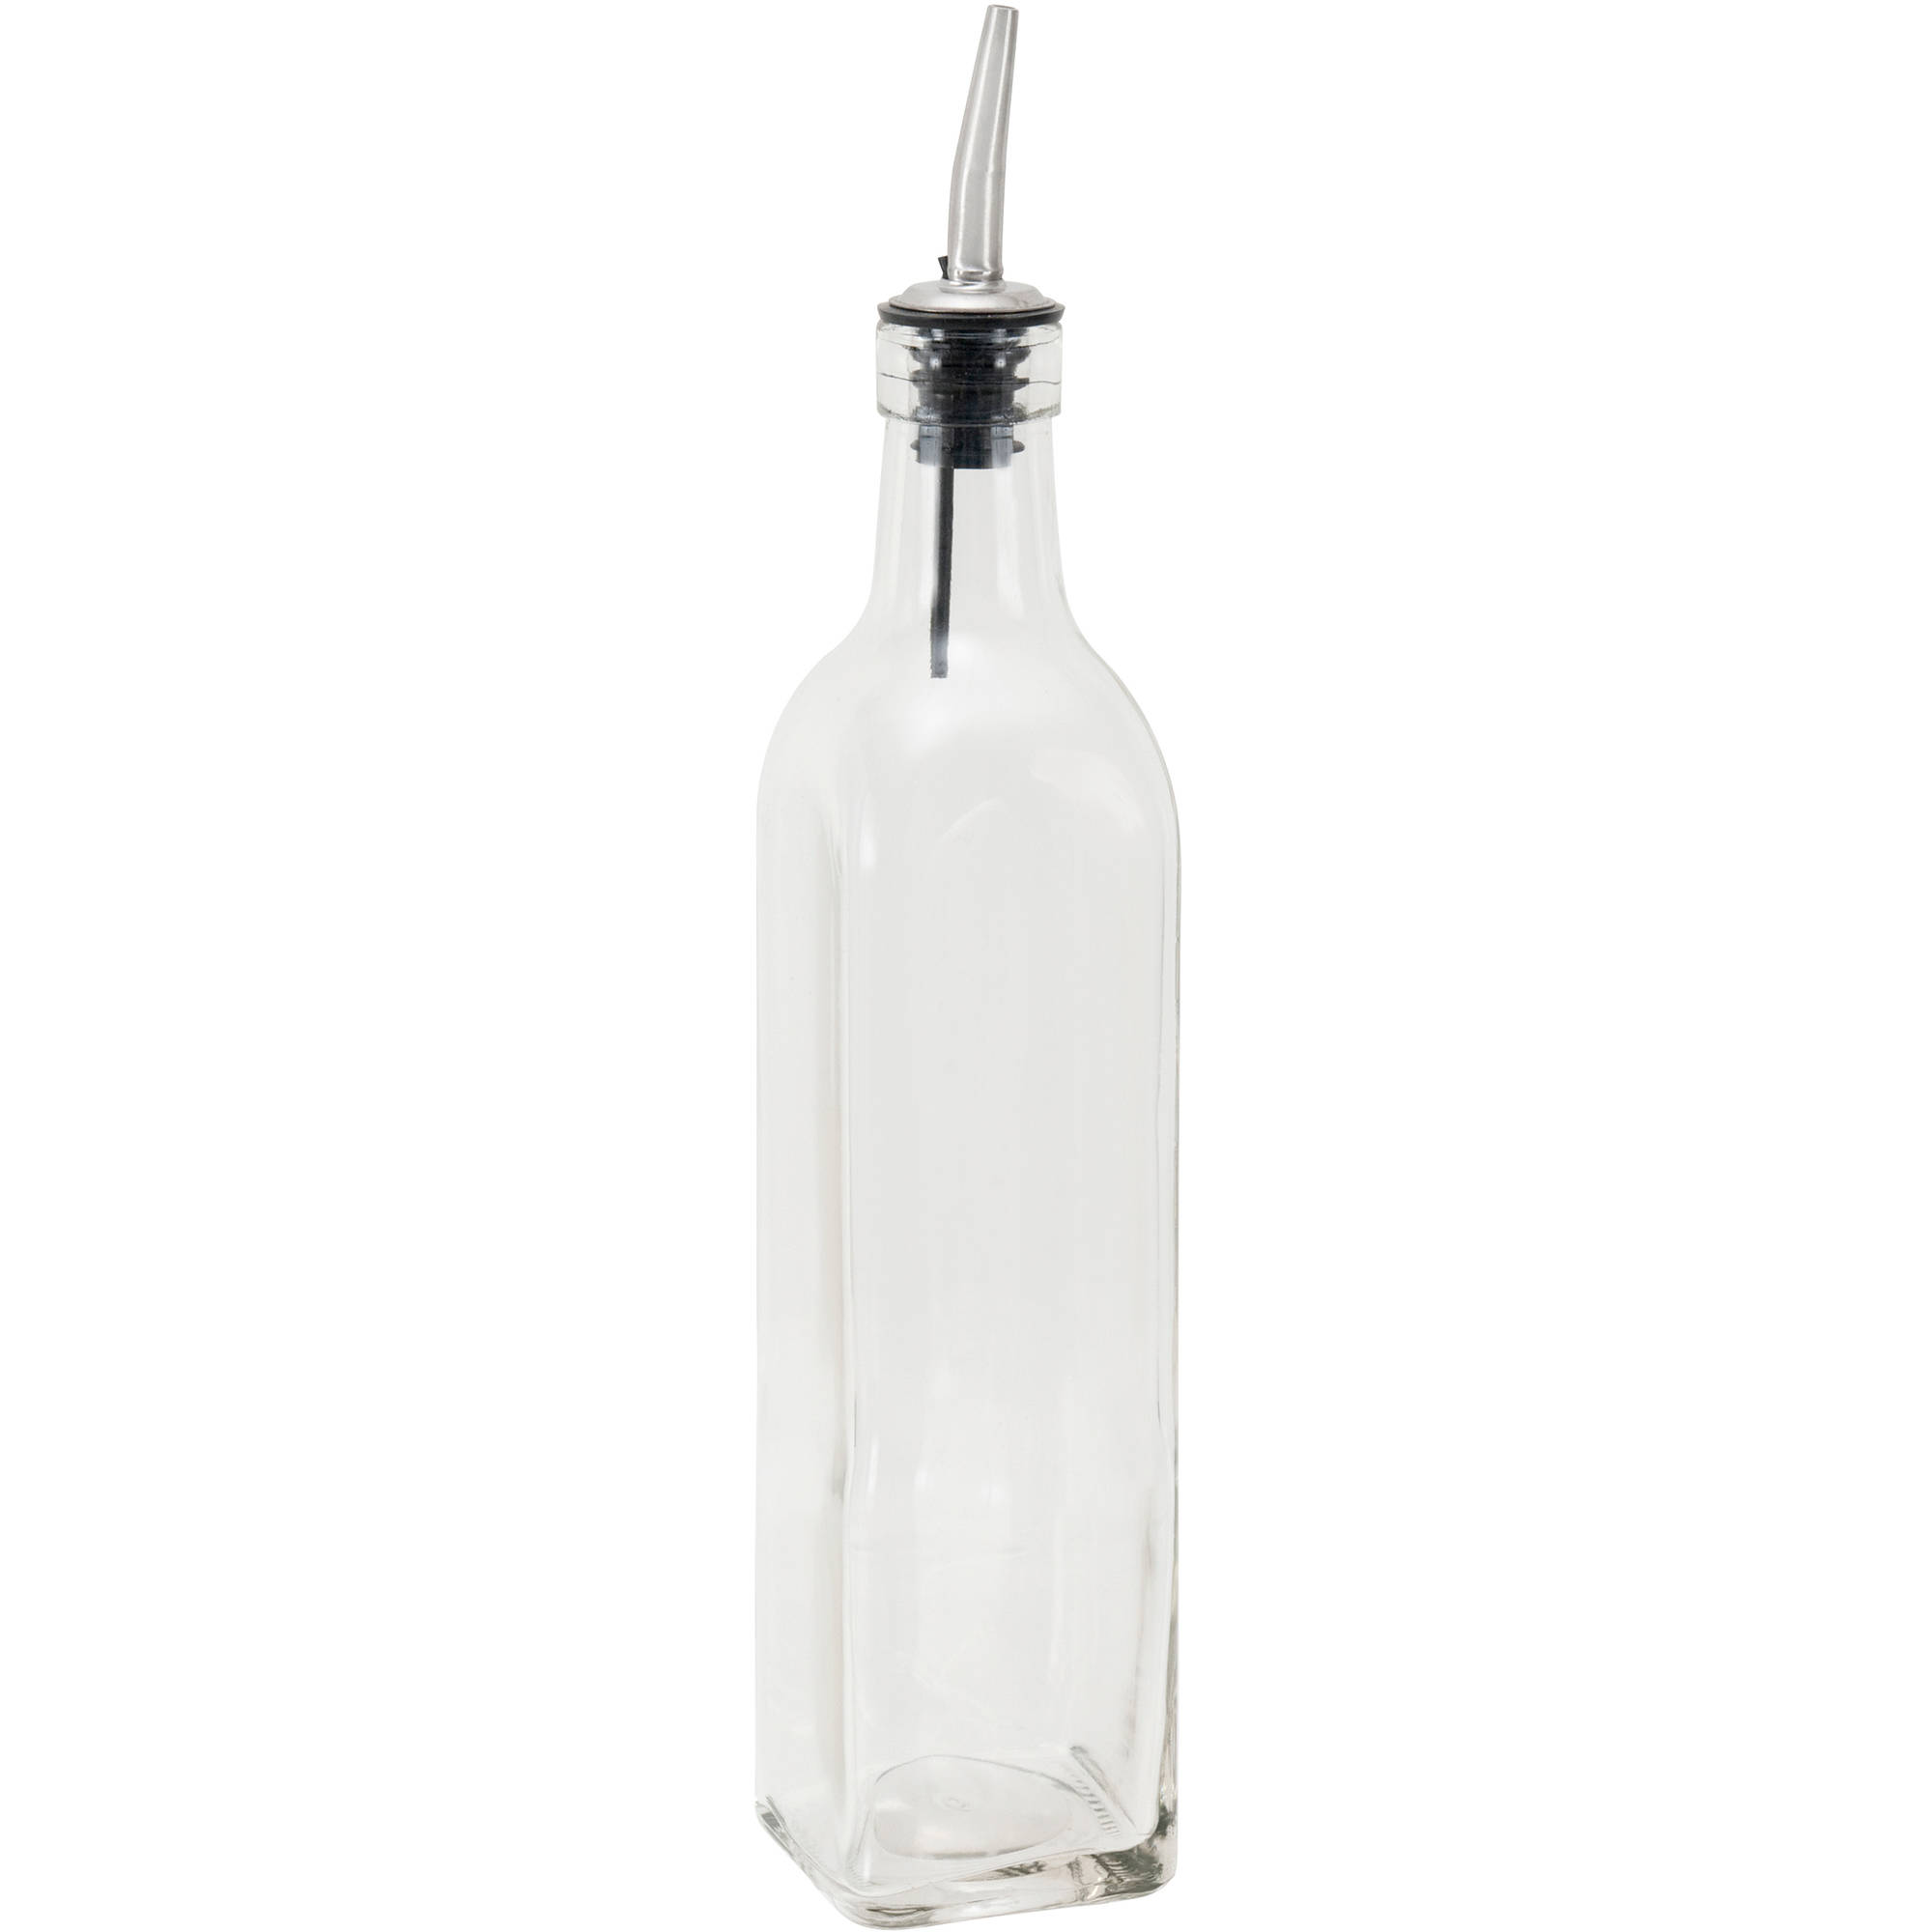 Mainstays Large Oil / Vinegar Bottle - image 1 of 1